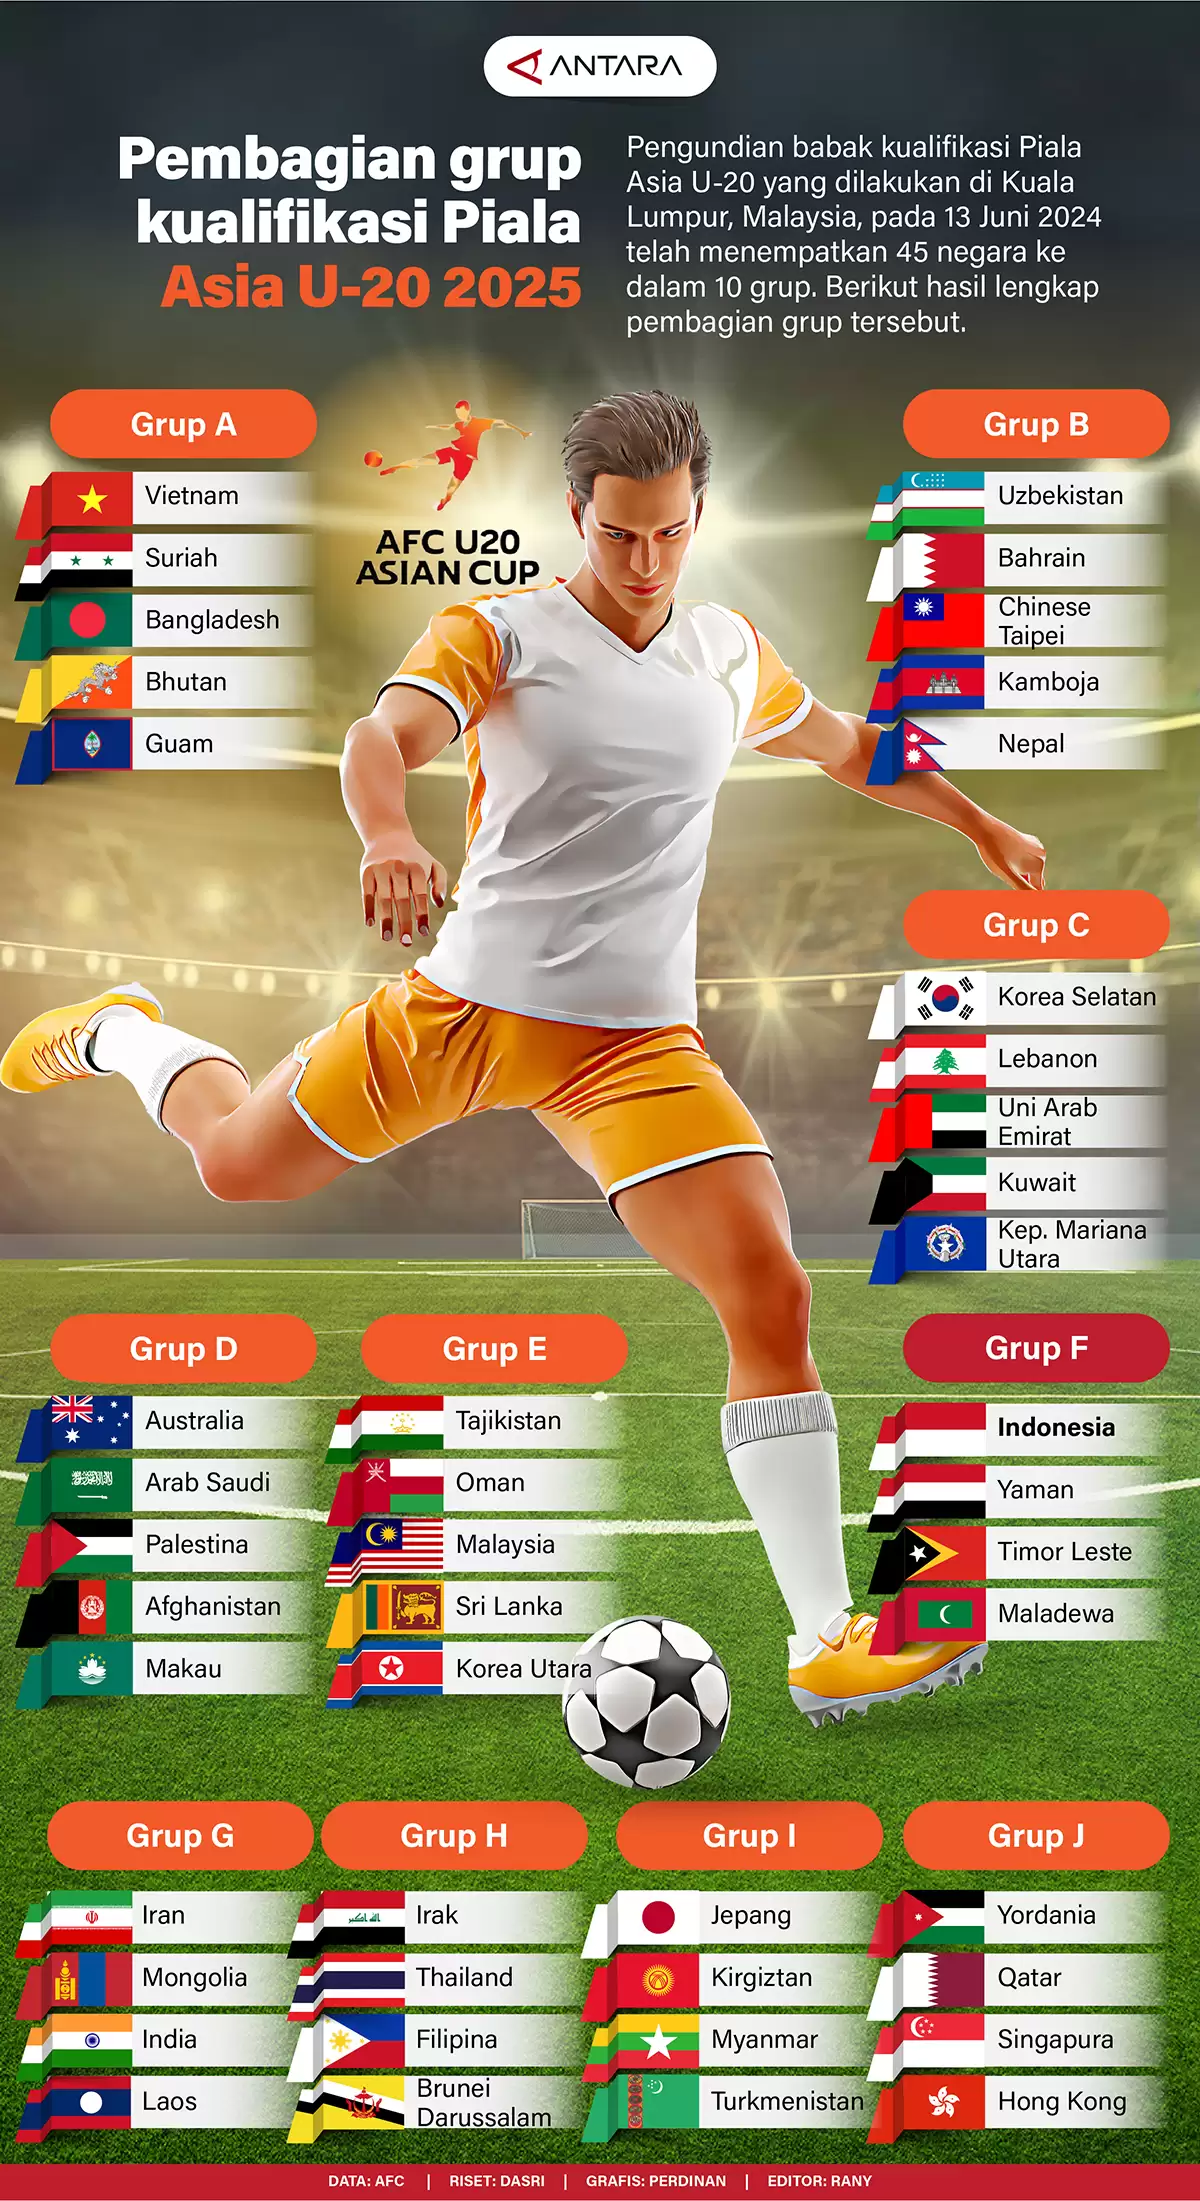 Pembagian Grup Kualifikasi Piala Asia U-20 2025